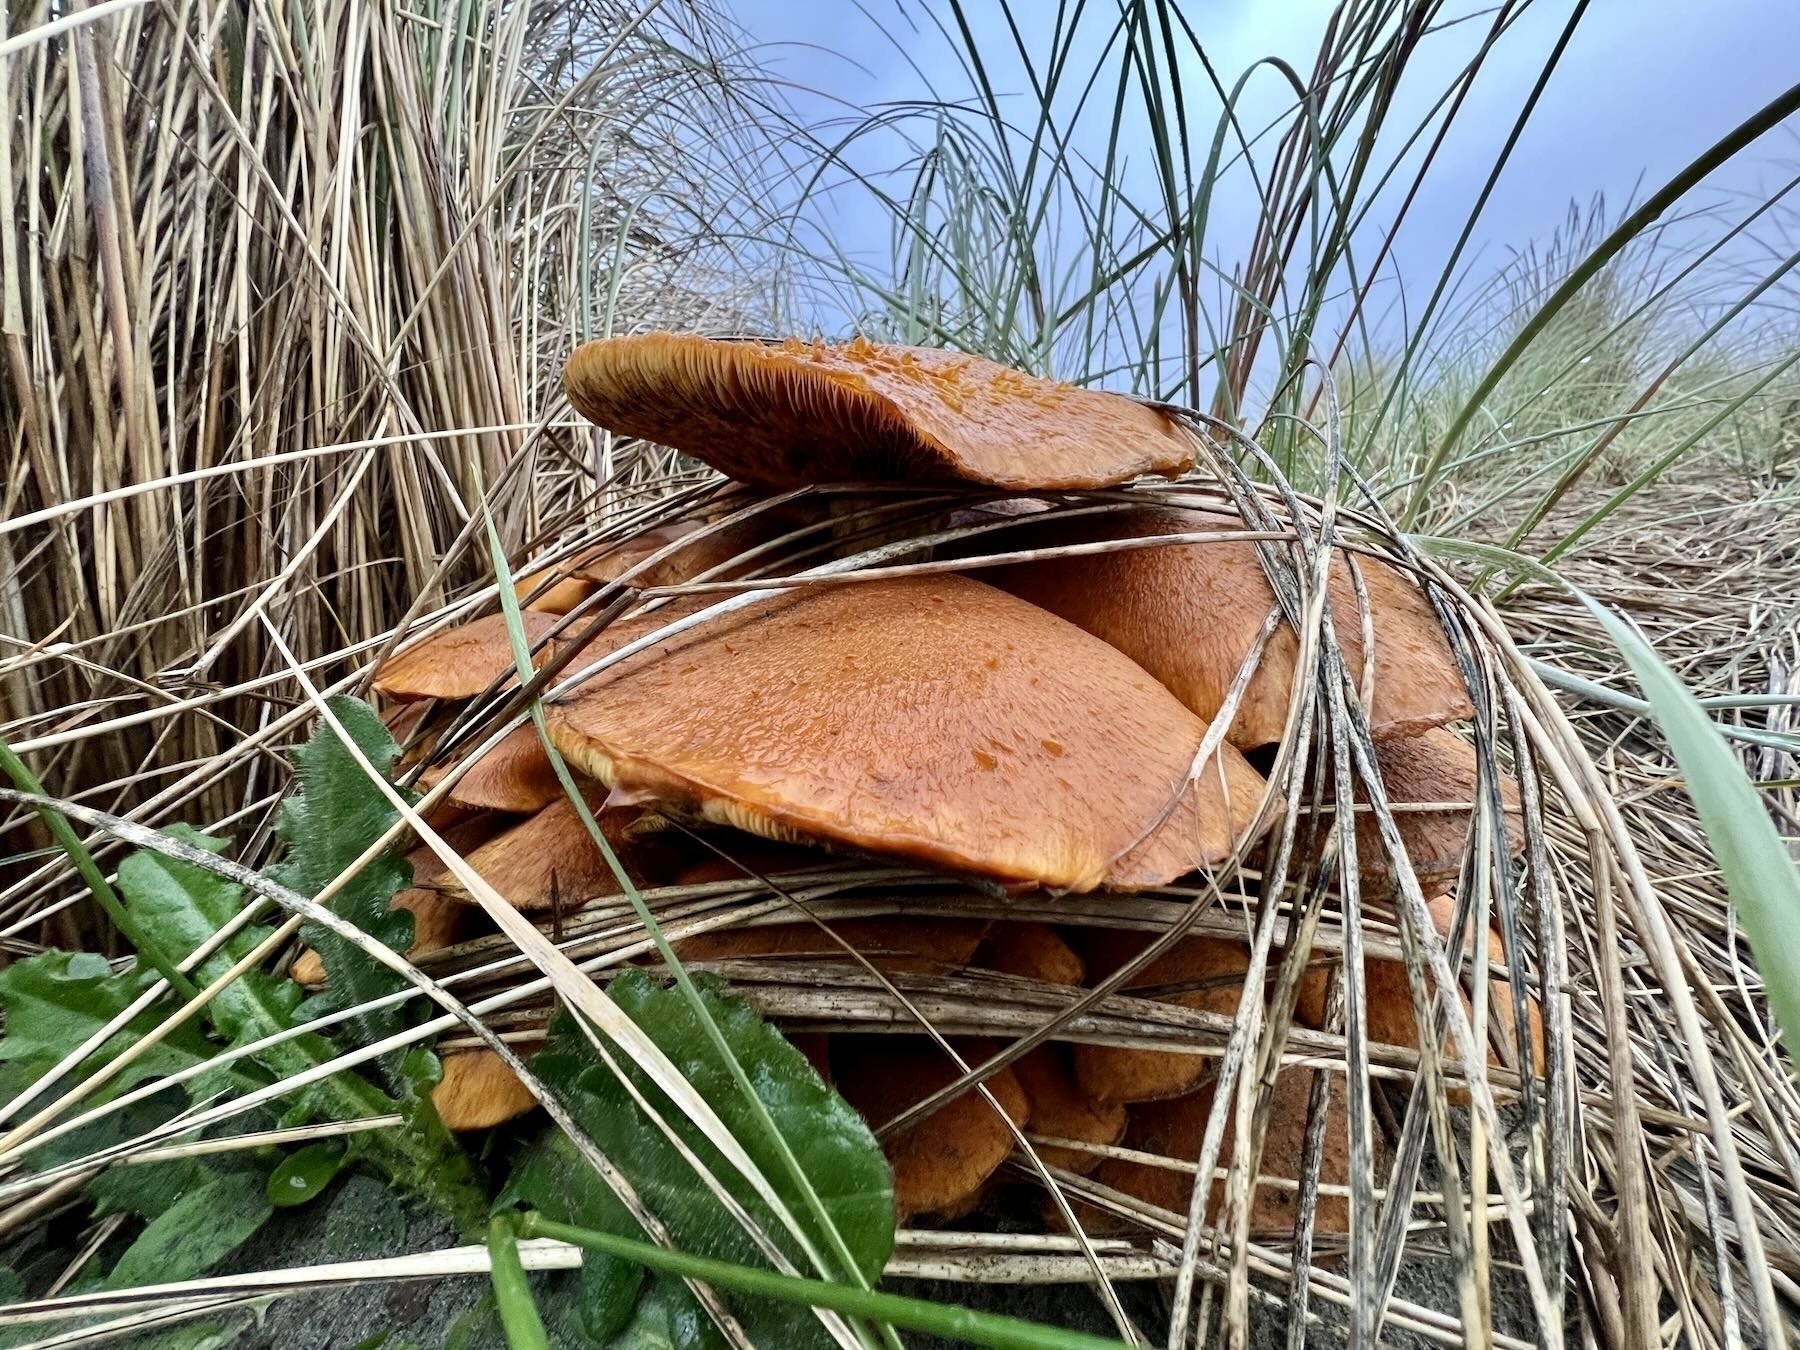 Many layered orange fungus in the dunes.